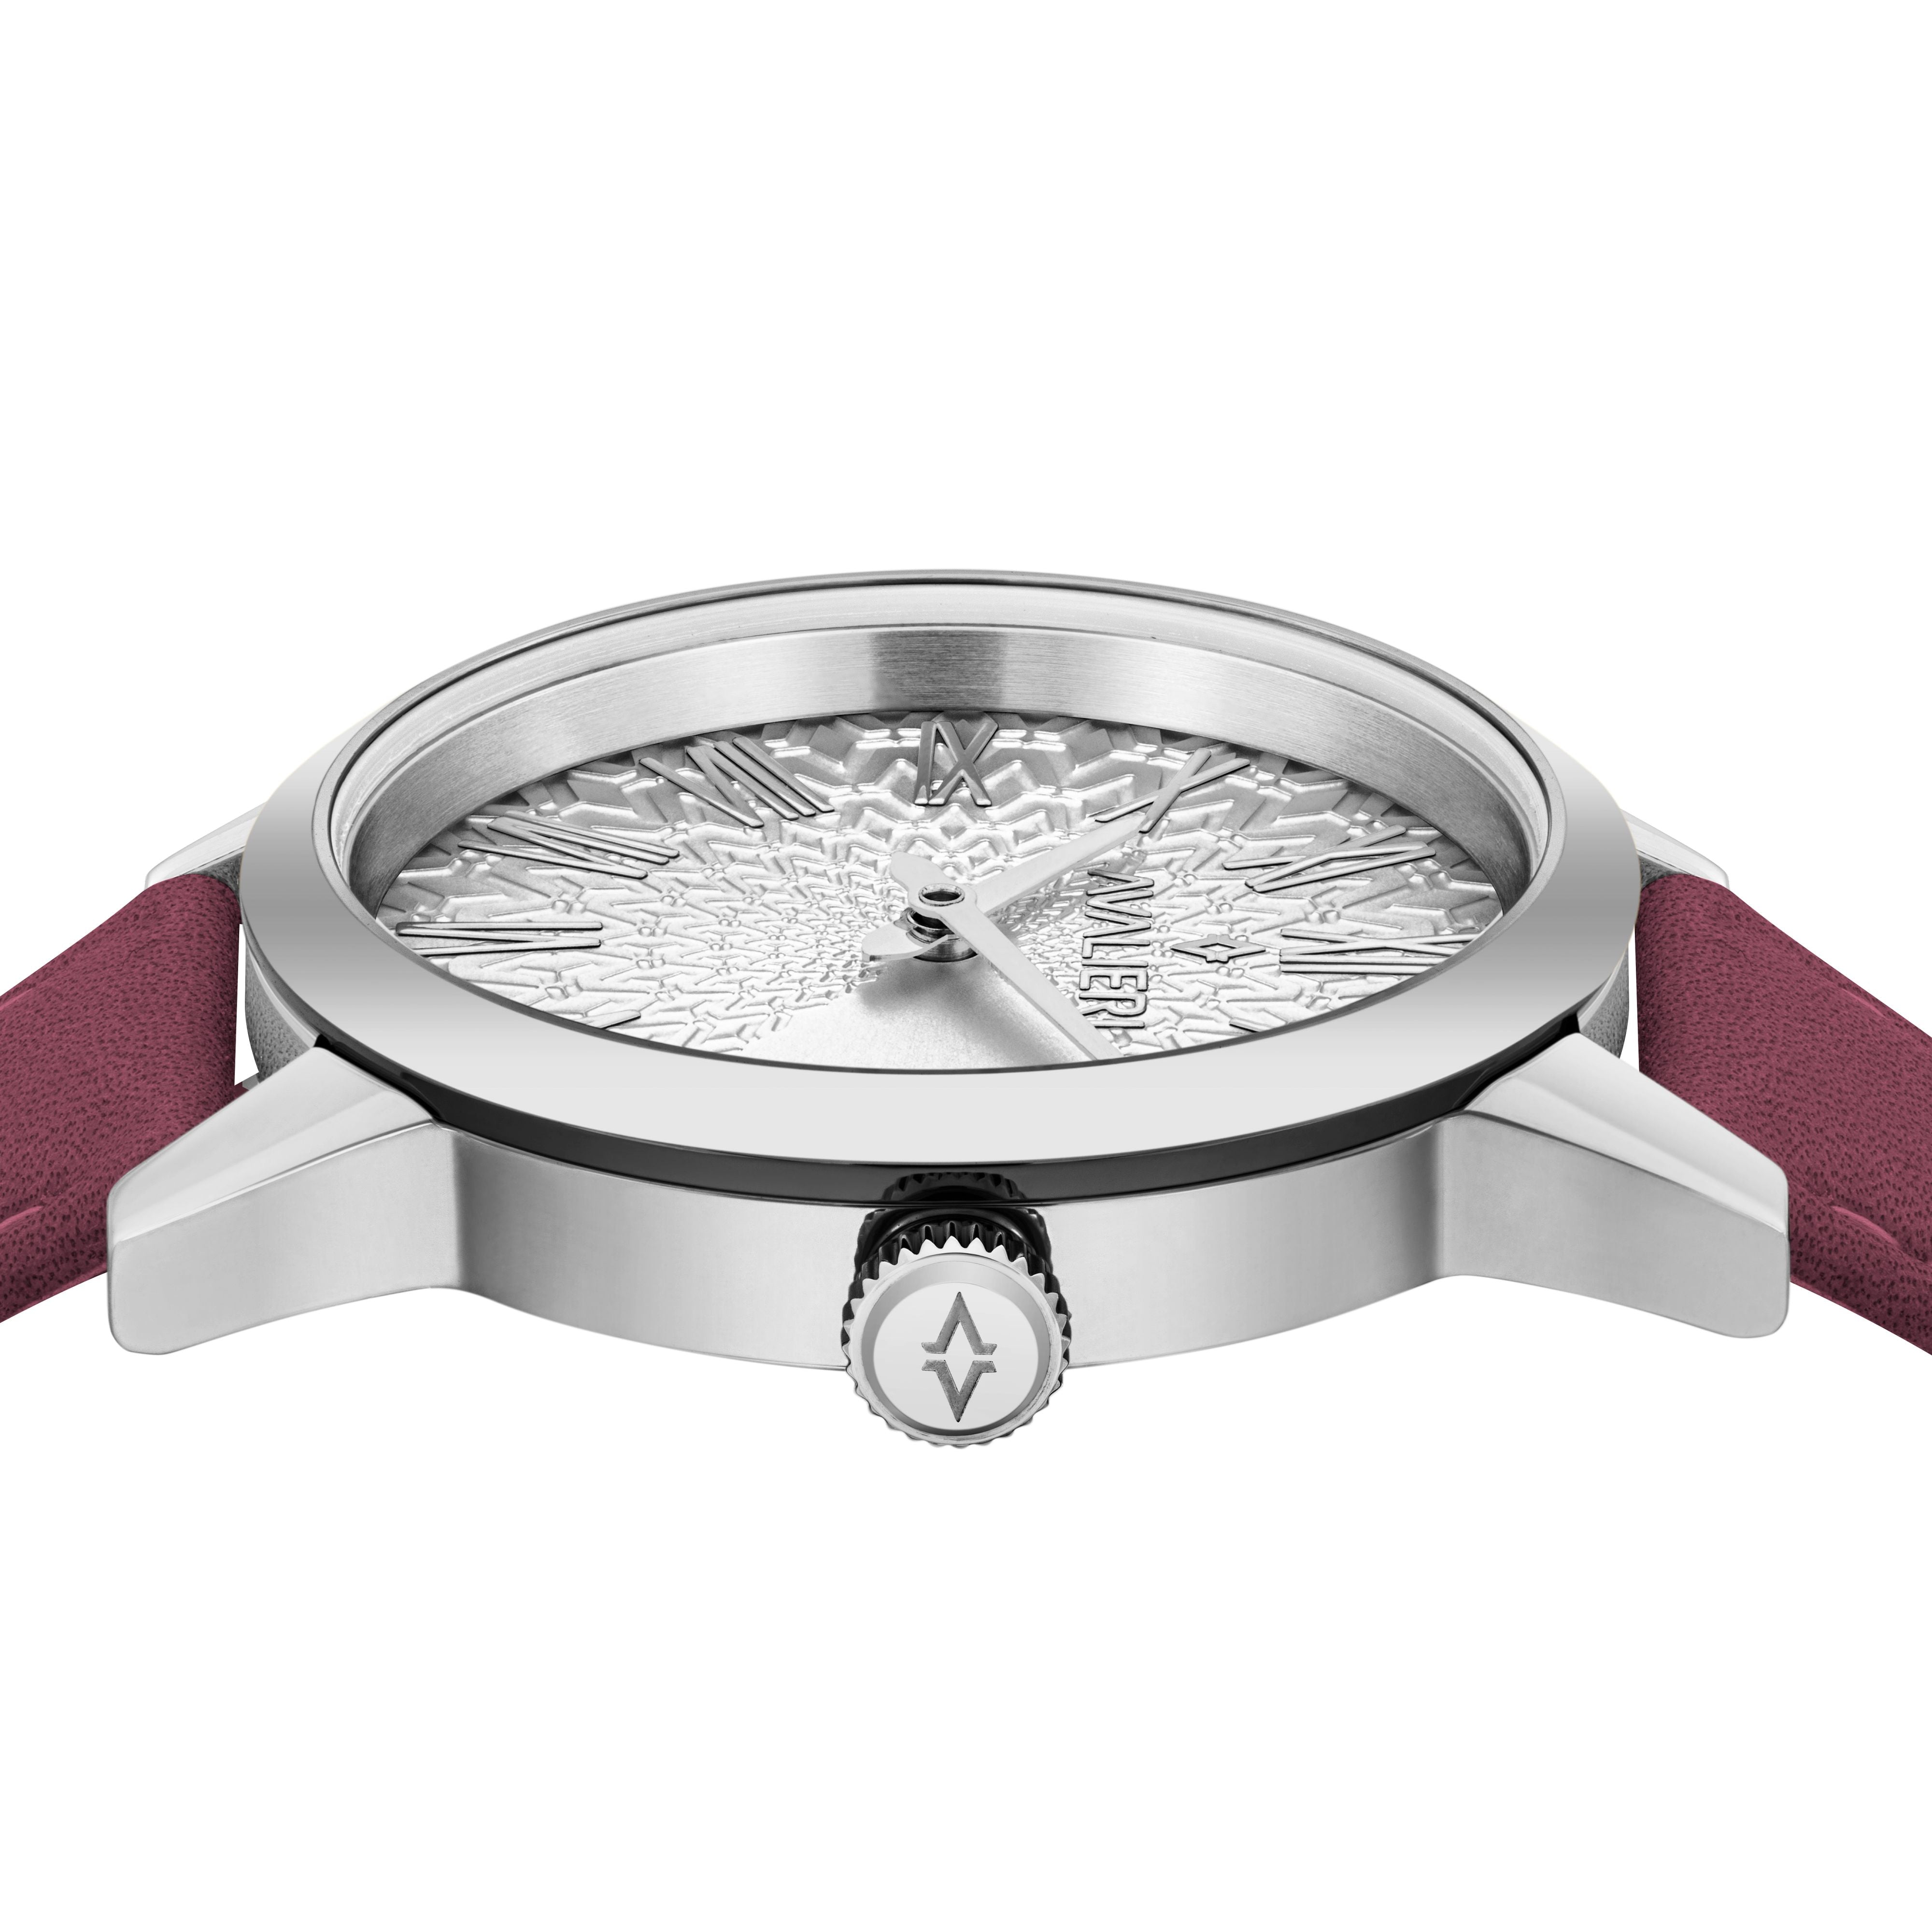 Avalieri Women's Quartz Watch Silver Dial - AV-2348B